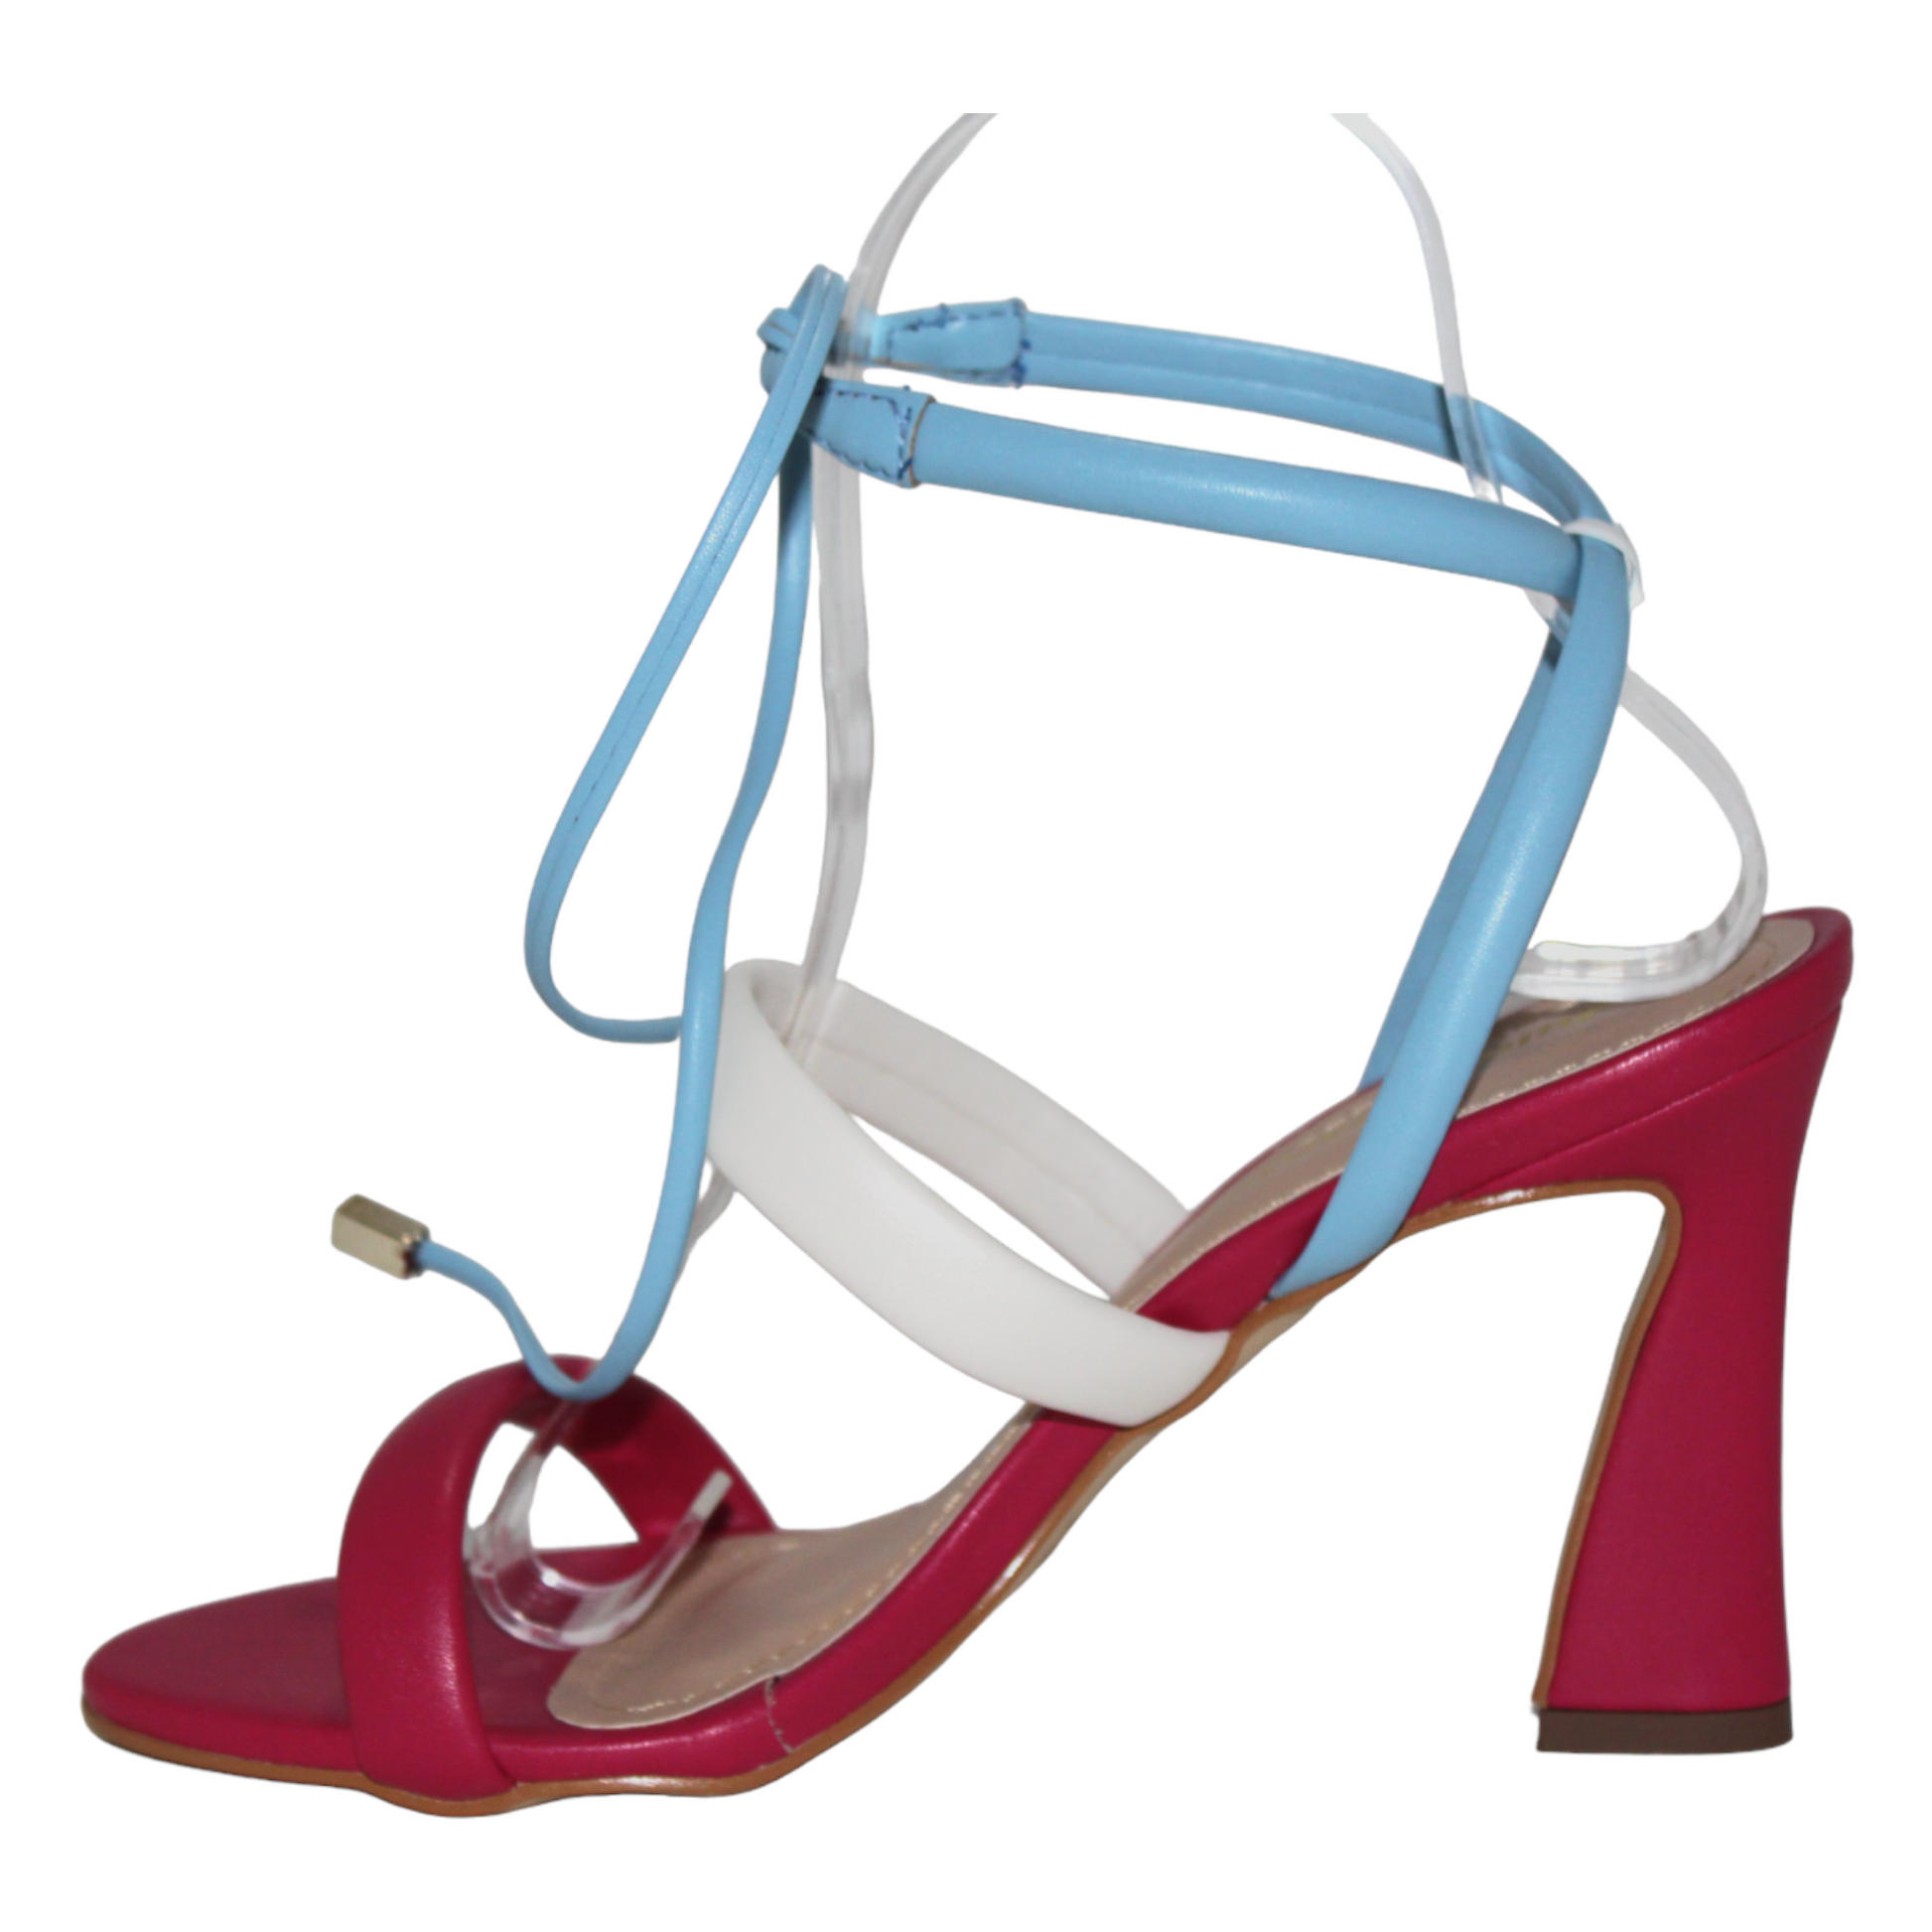 Multicolored Tie Up Heeled Sandal - Julia & Santos 